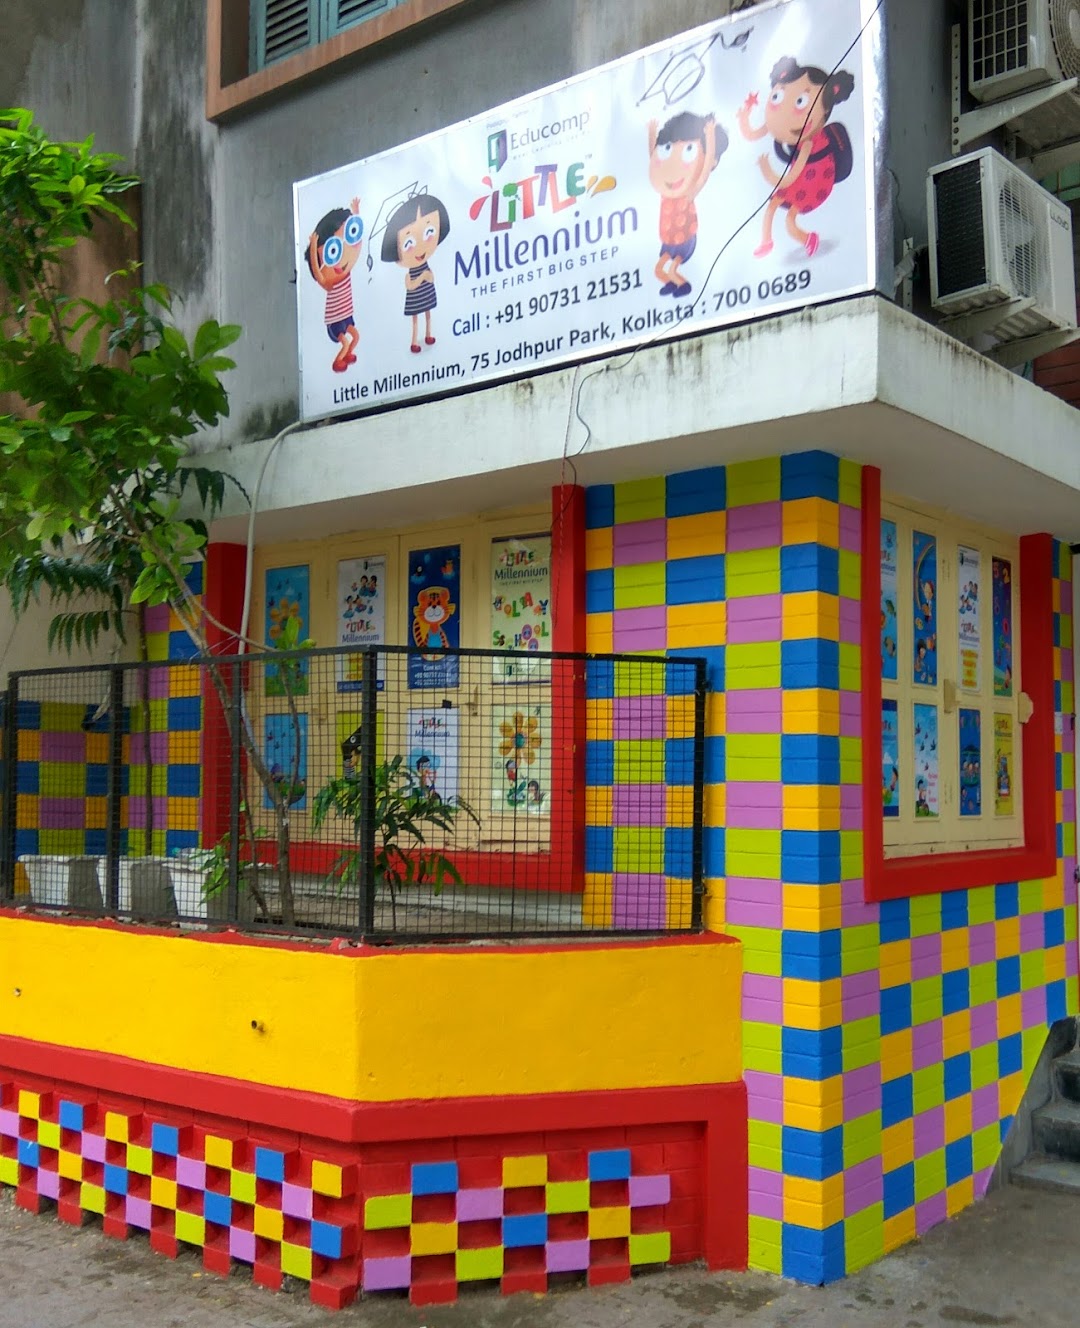 Little Millennium Preschool & Daycare - Jodhpur Park - Kolkata